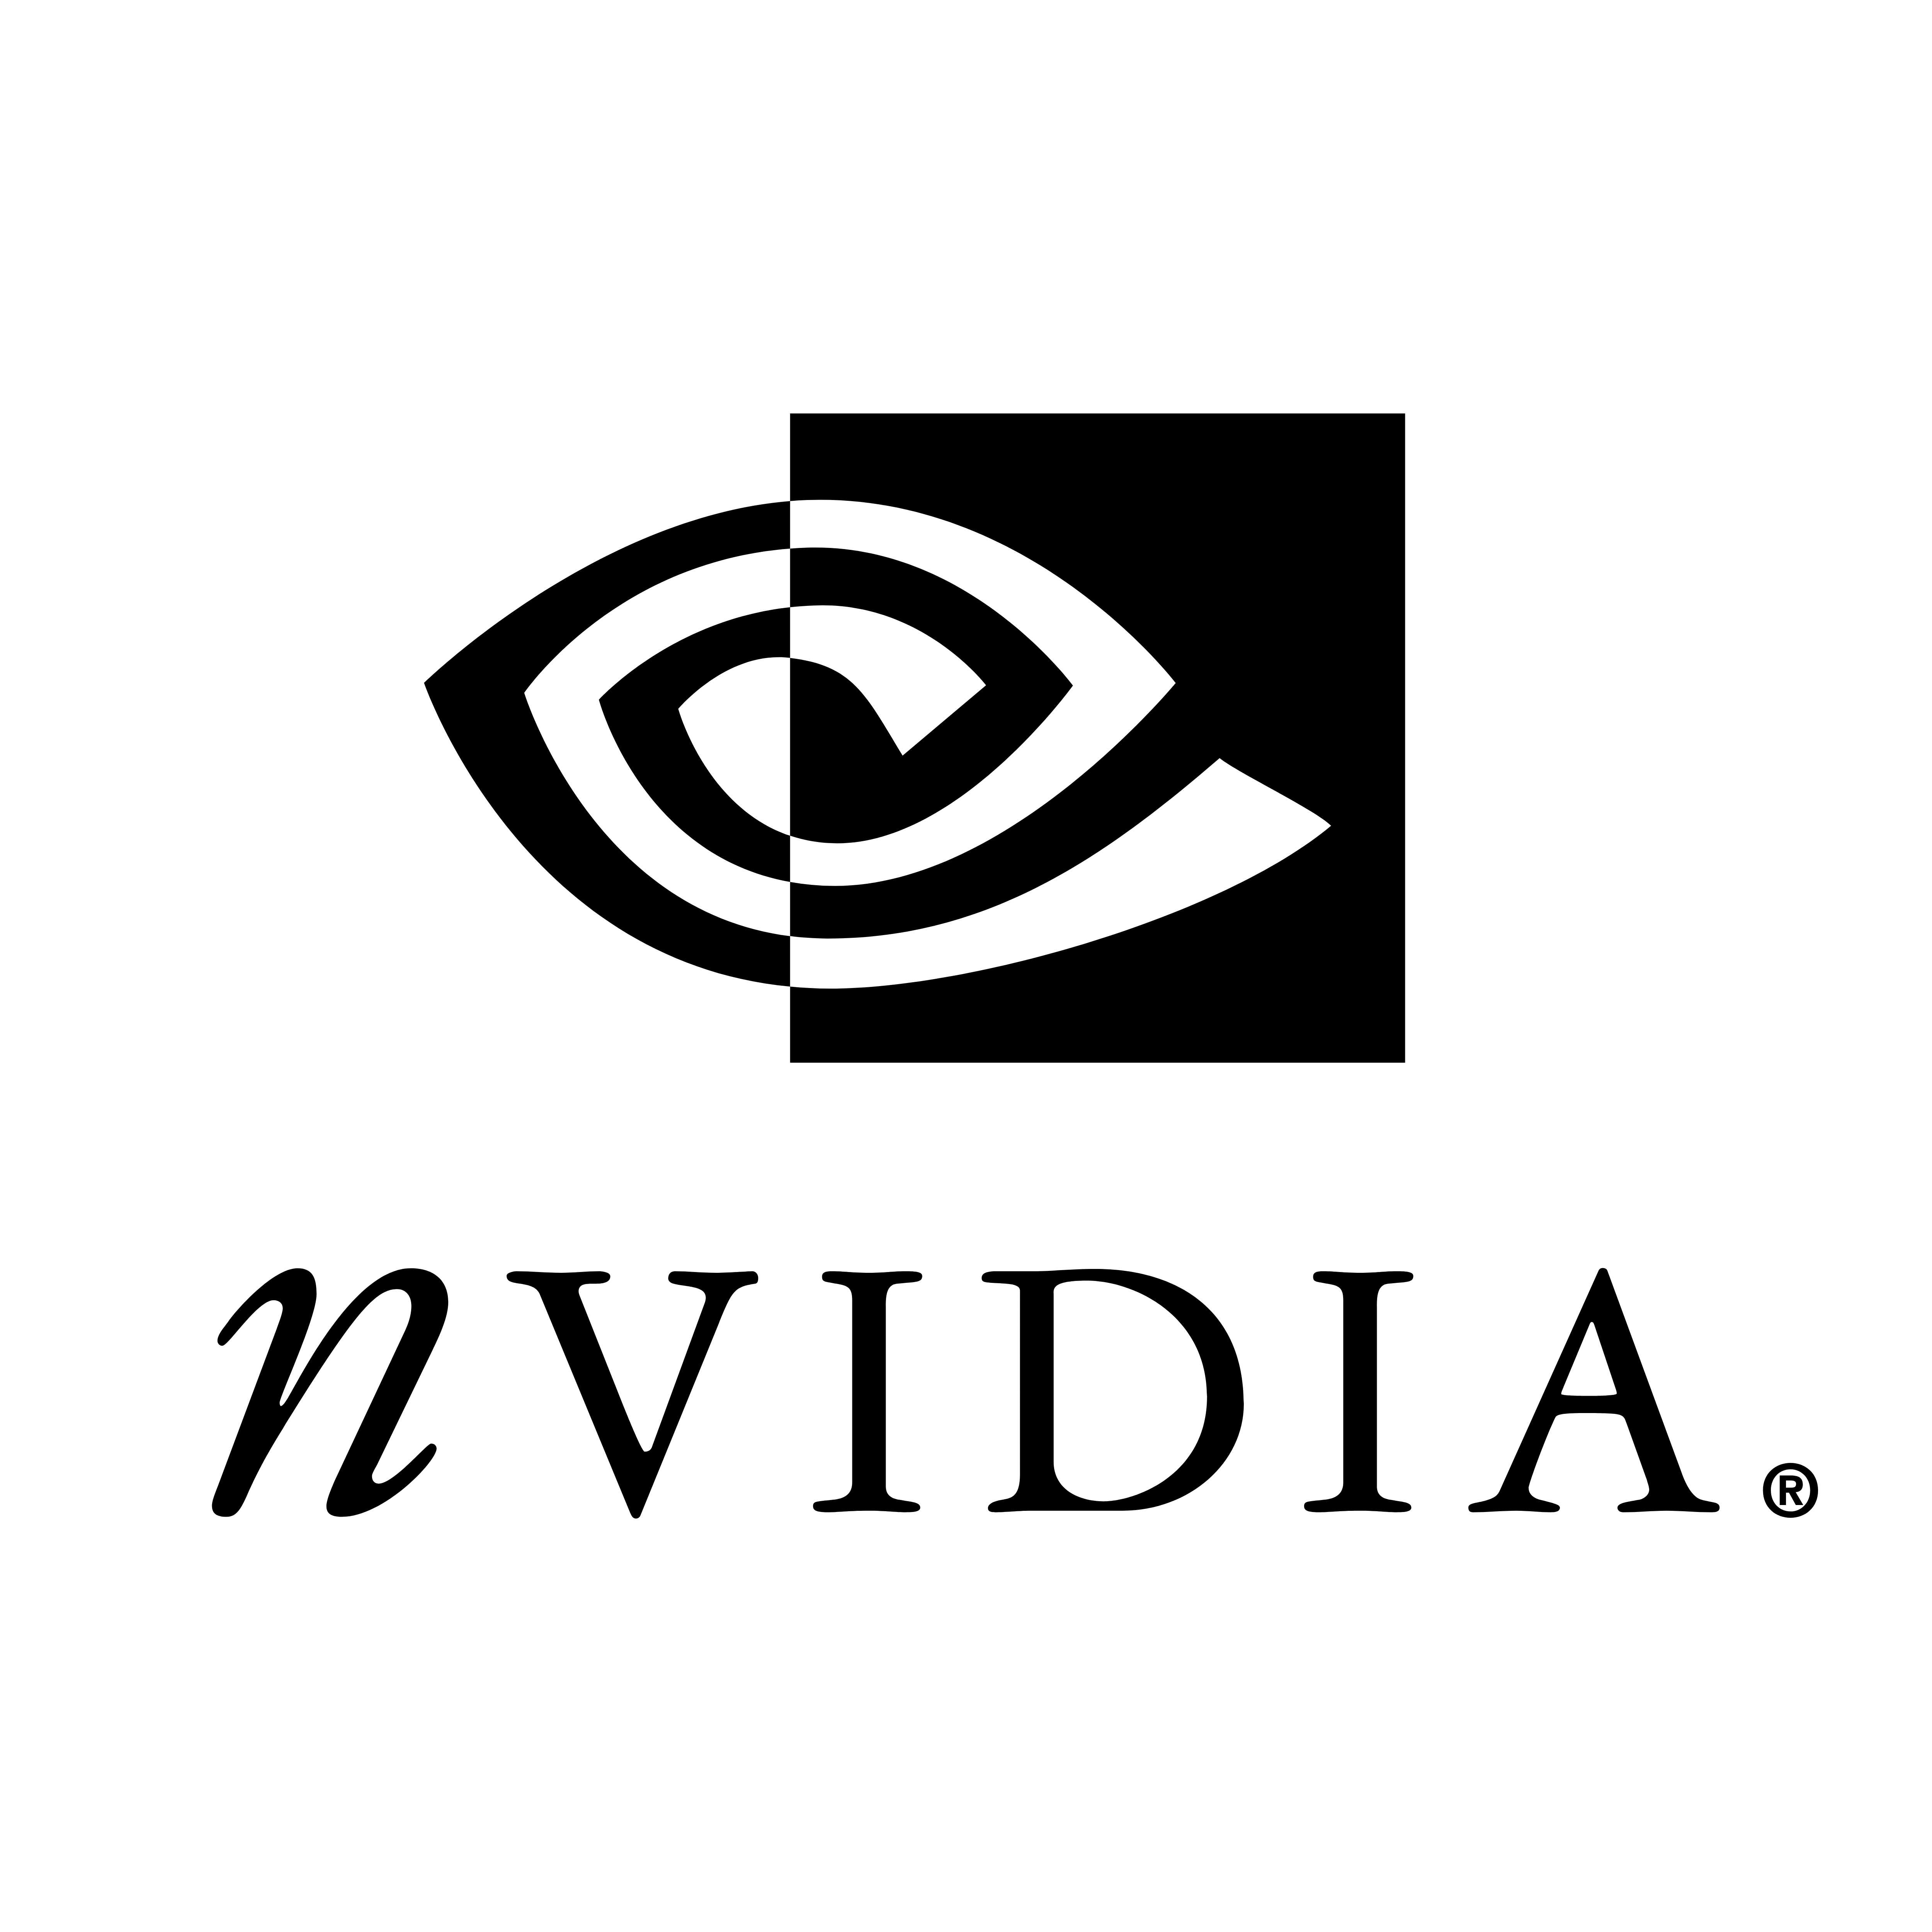 Intel Nvidia Logo , Png Downl